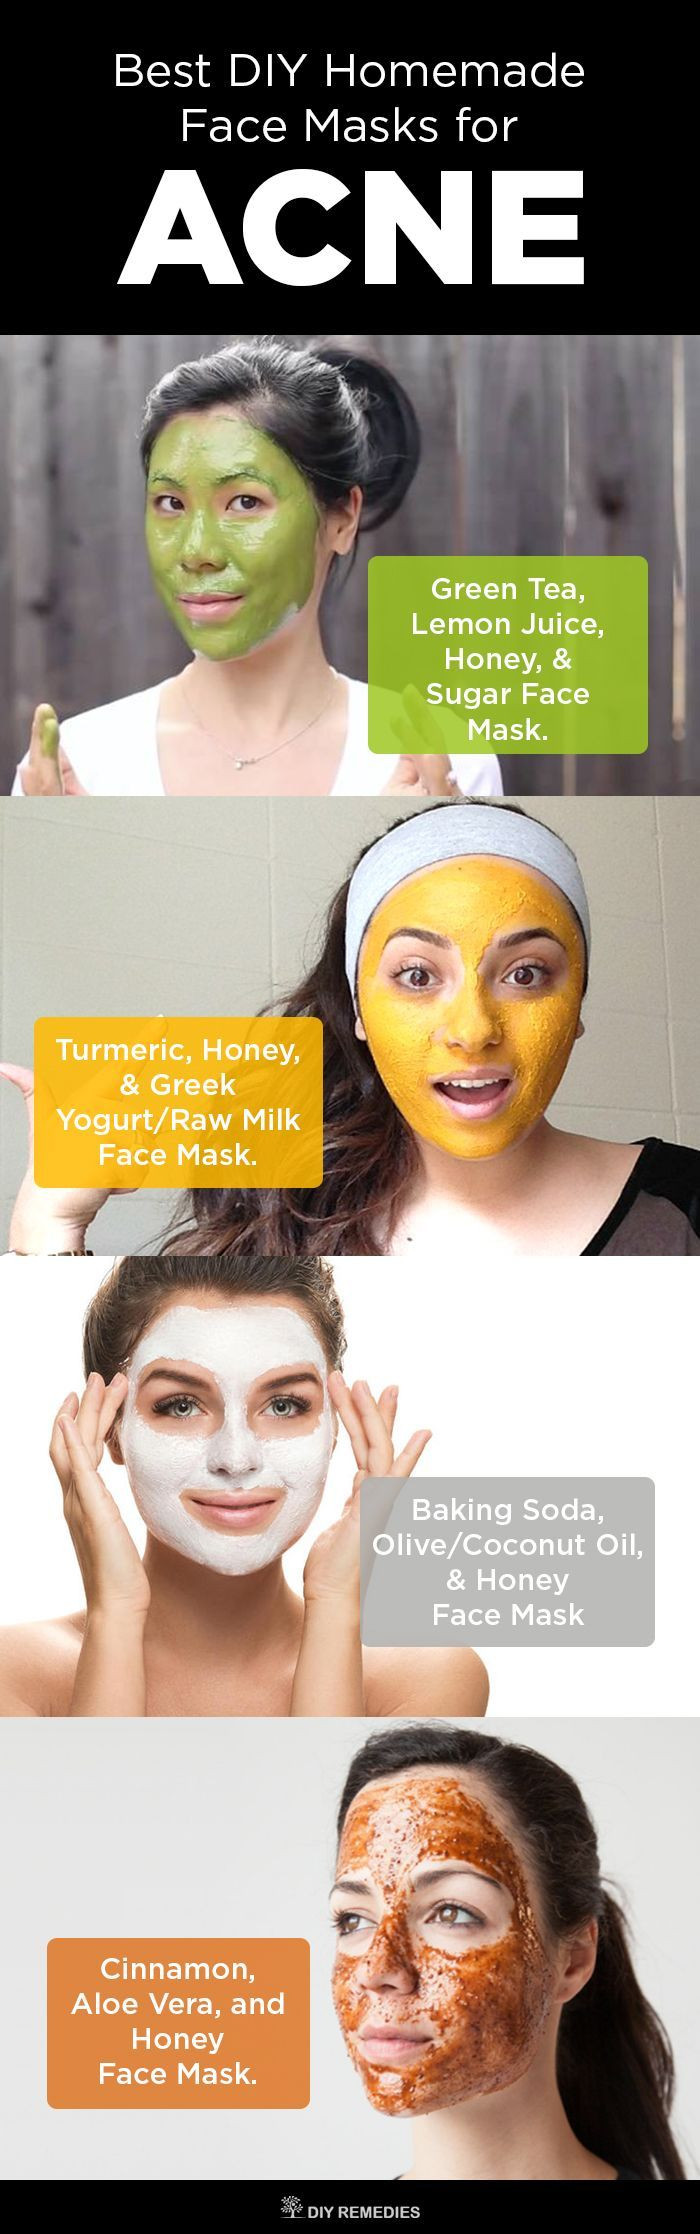 Acne Mask DIY
 6 Best DIY Homemade Face Masks for Acne